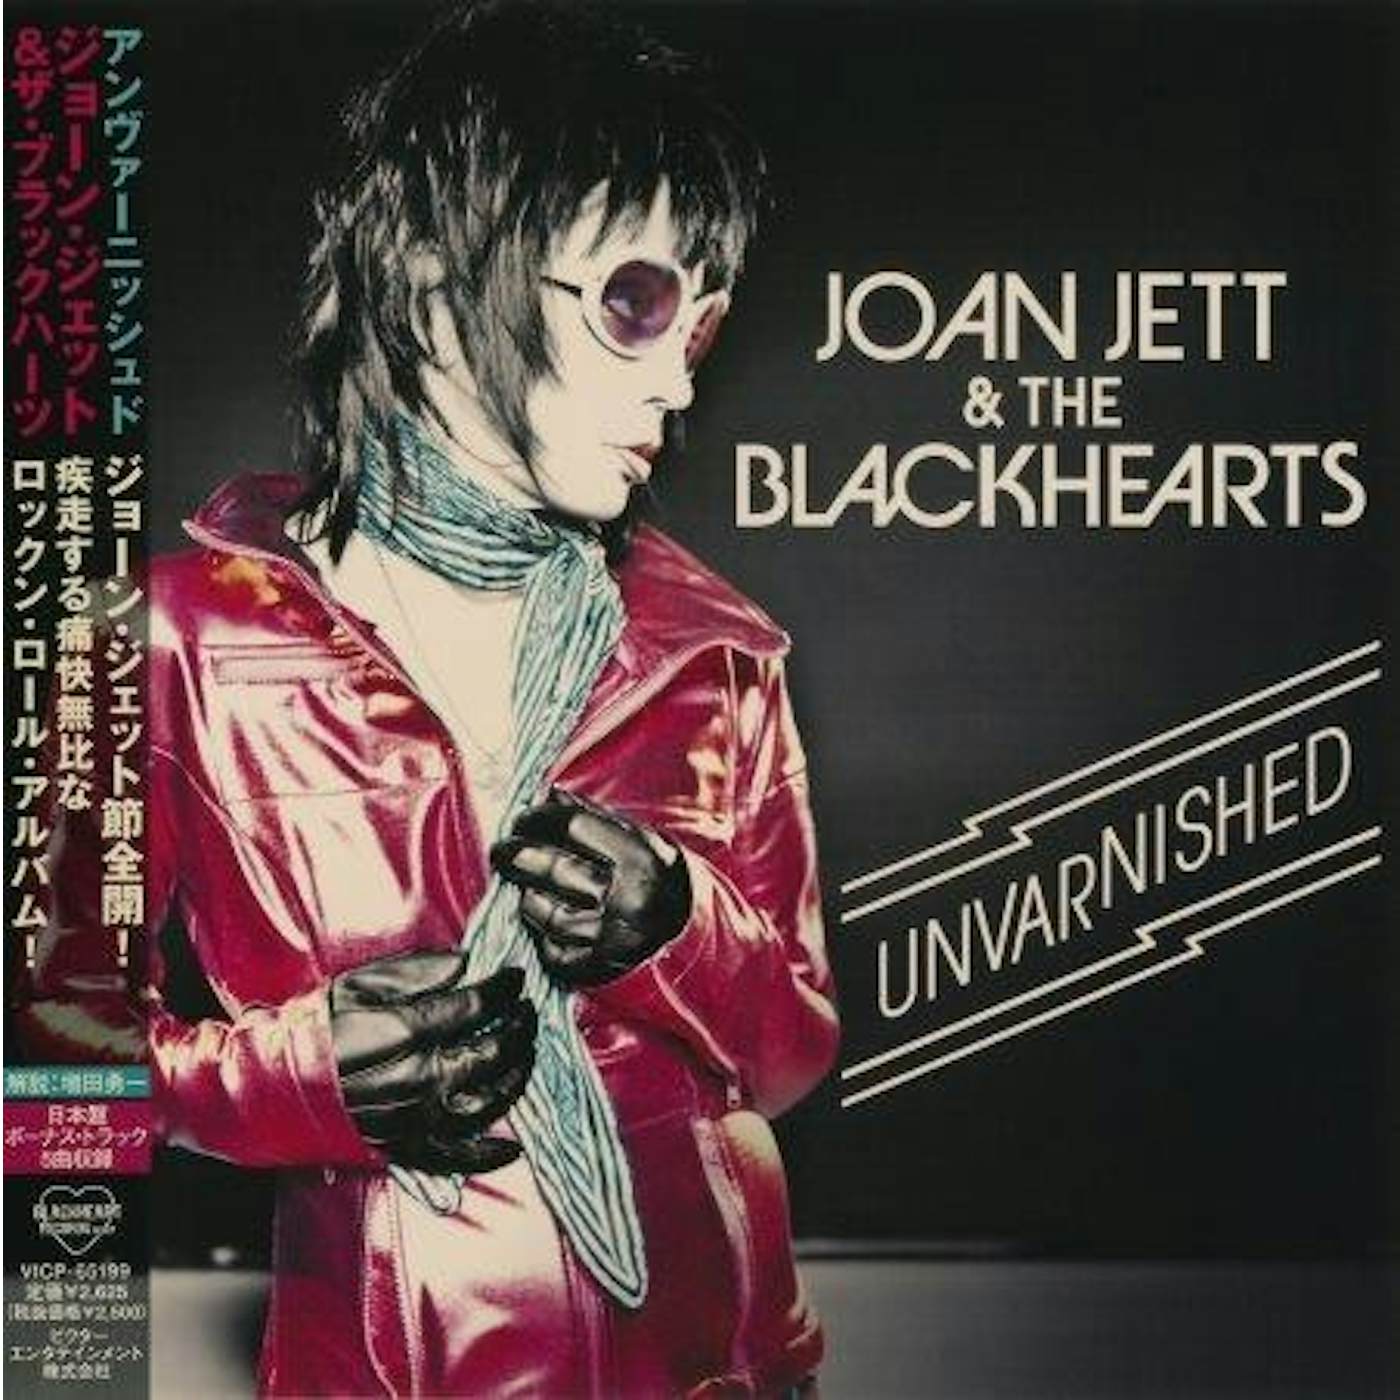 Joan Jett & the Blackhearts UNVARNISHED CD